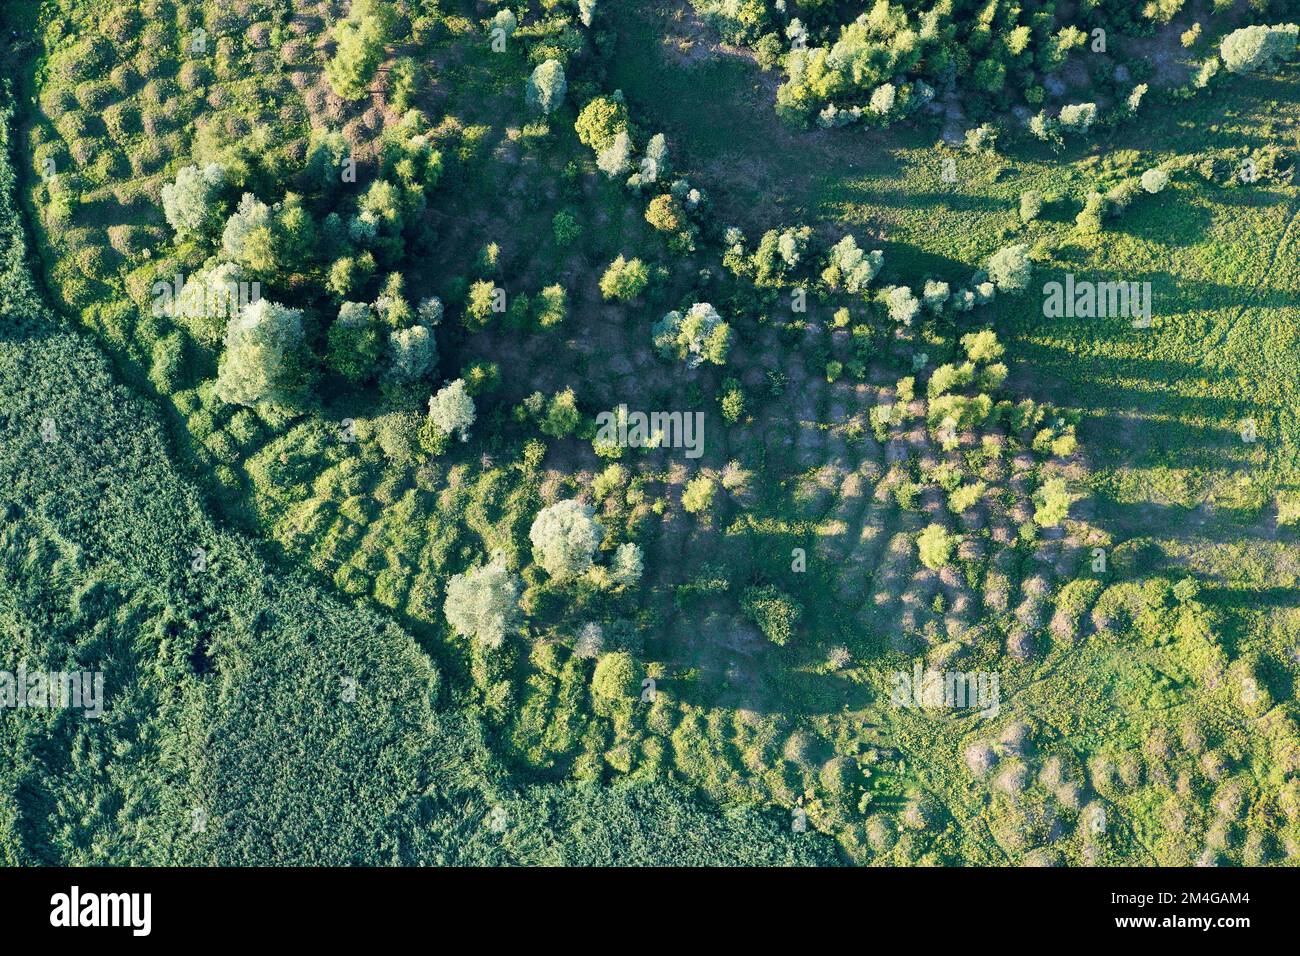 Ecological compensation area Linkeroever, aerial view, Belgium, Antwerp Stock Photo